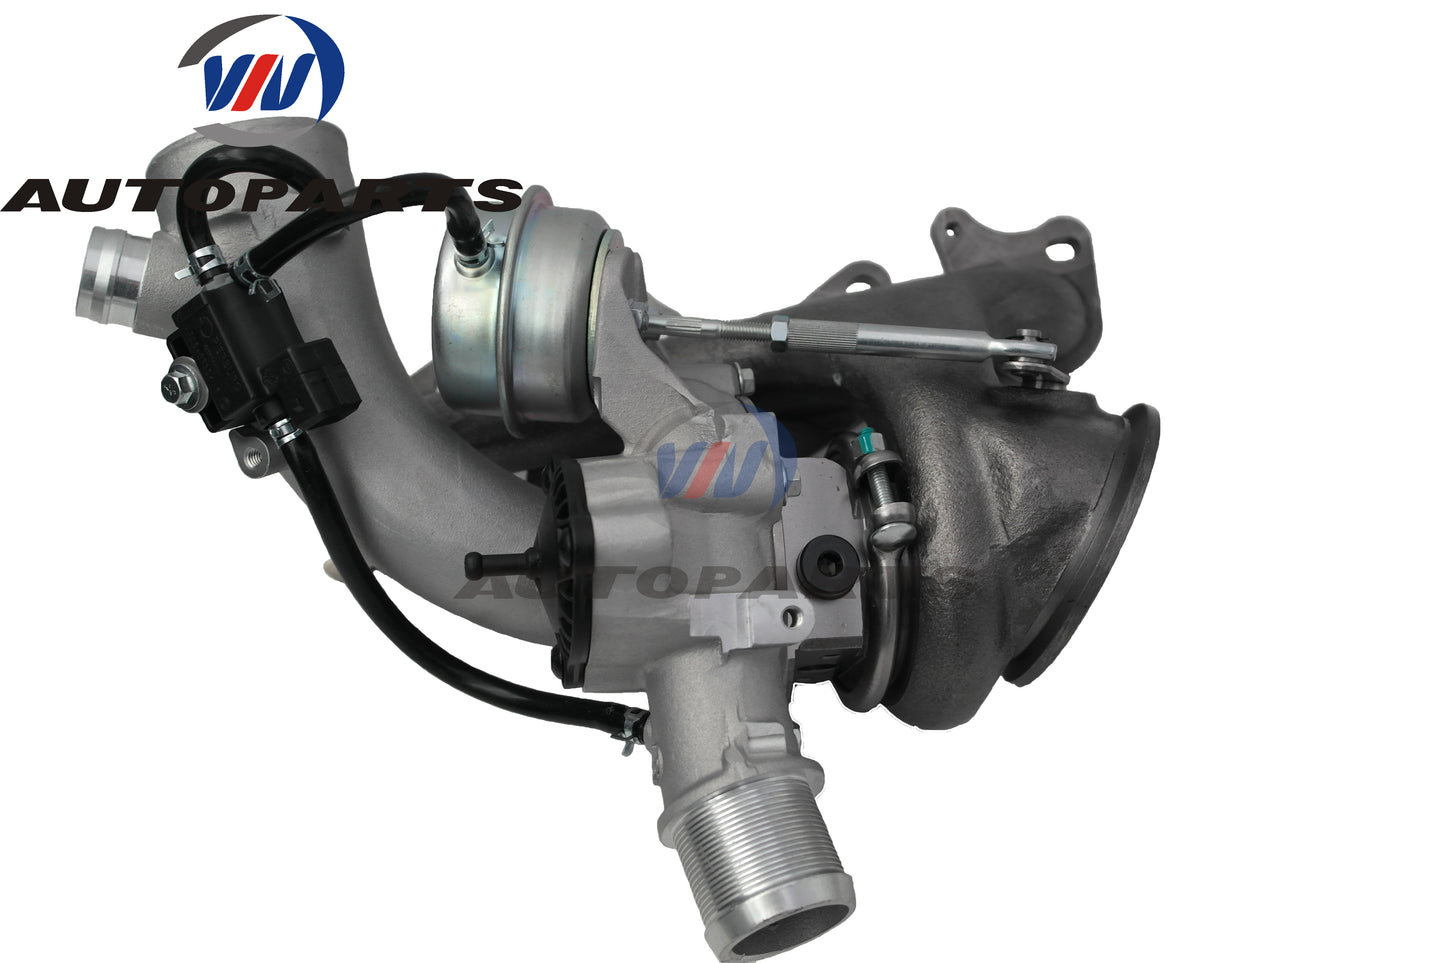 Turbocharger MGT14 781504-0004 for Chevrolet Cruze/Sonic/Trax,Buick Encore, Vauxhall, Opel Ecotec 1.4L